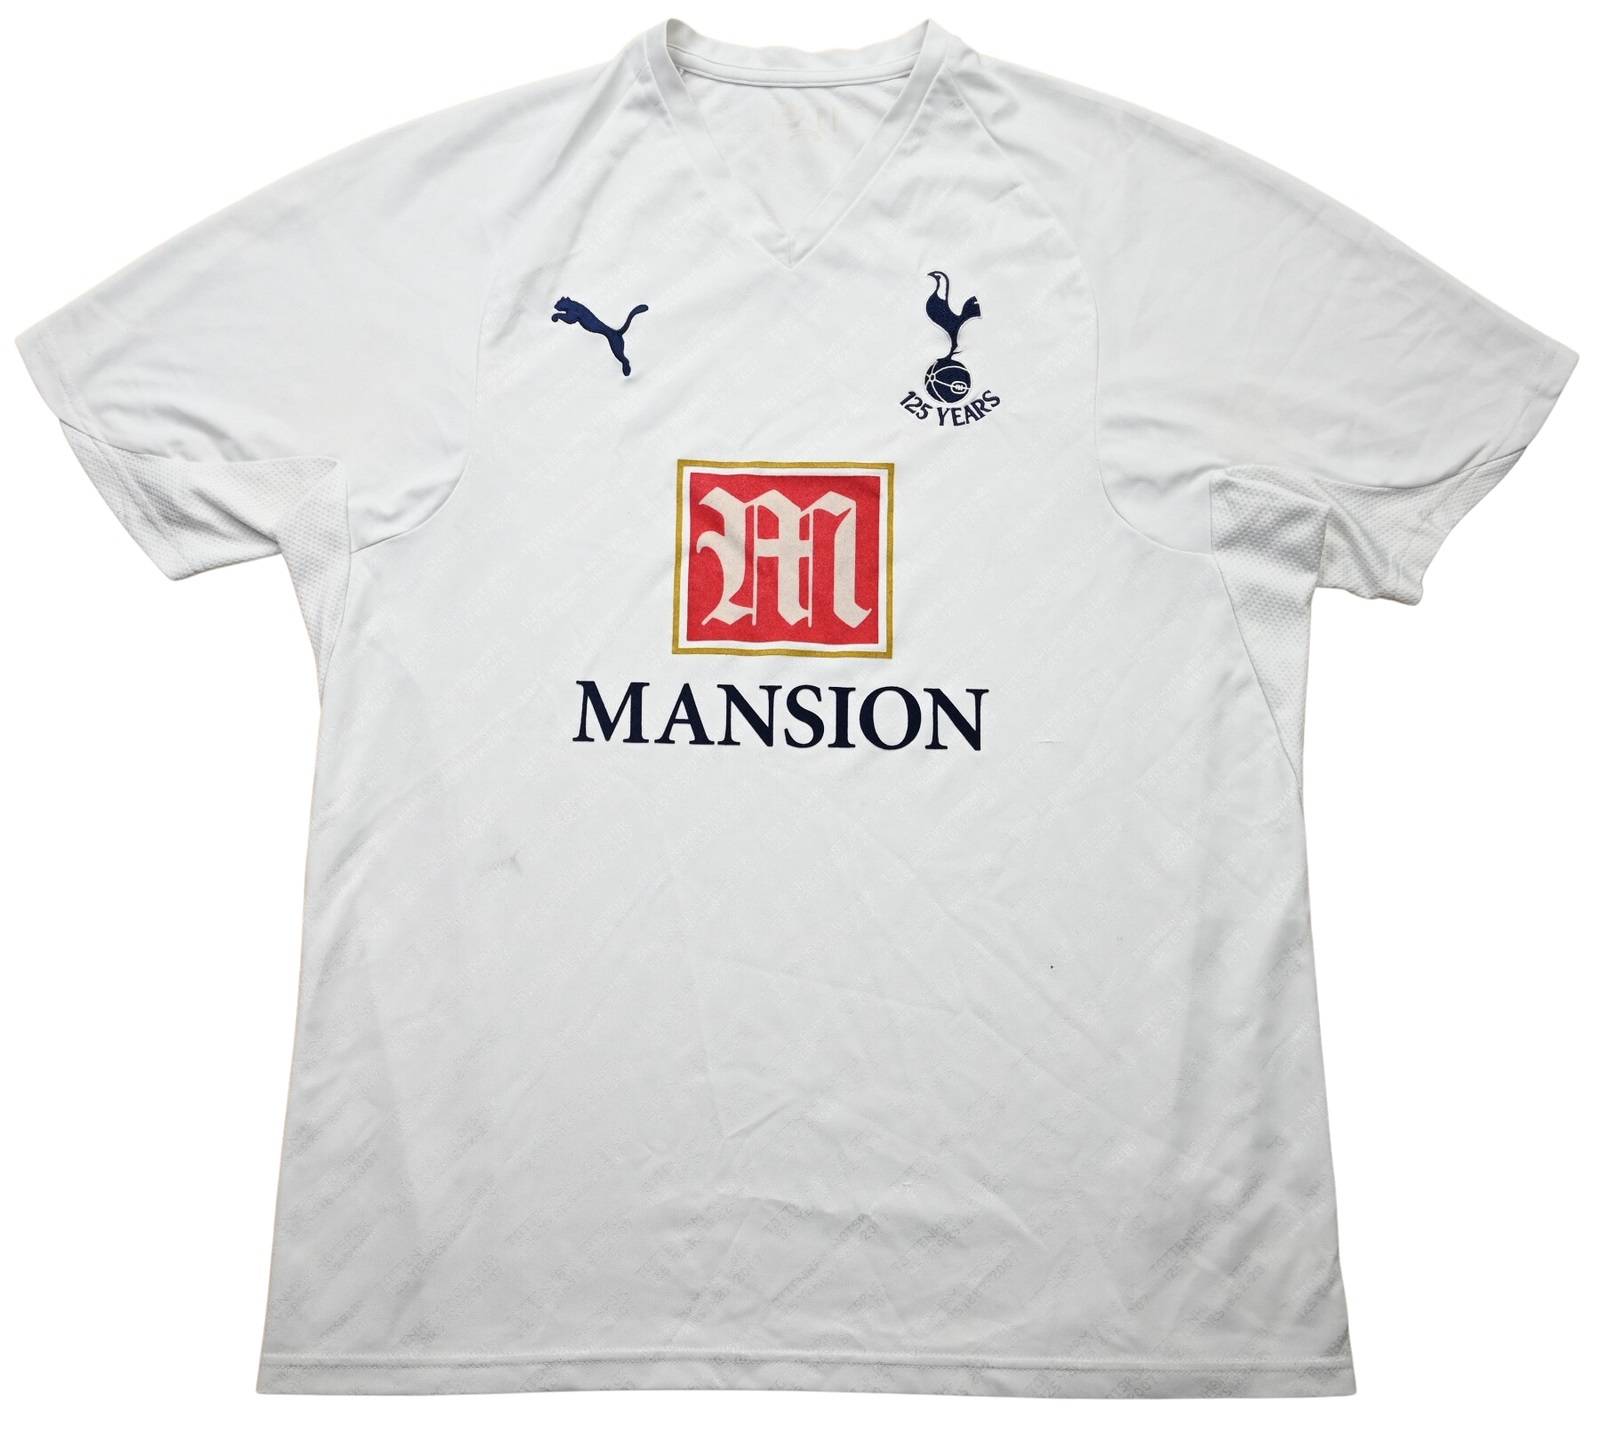 Buy Tottenham Hotspur Shirts, Classic Football Kits